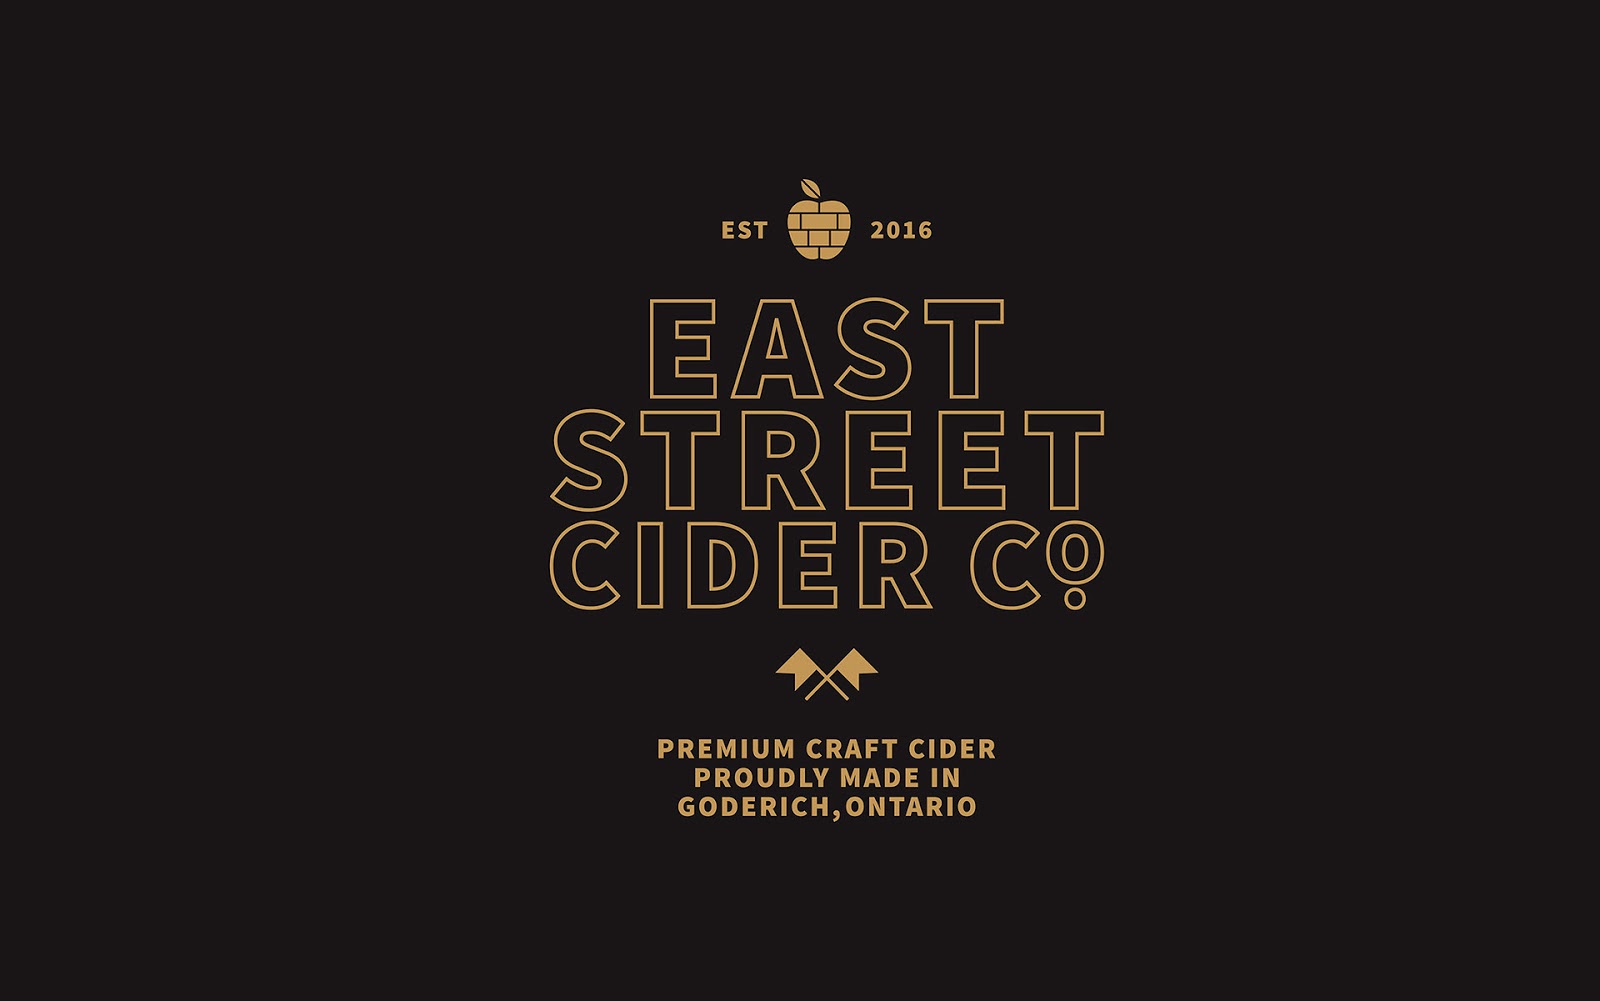 East Street苹果酒包装设计